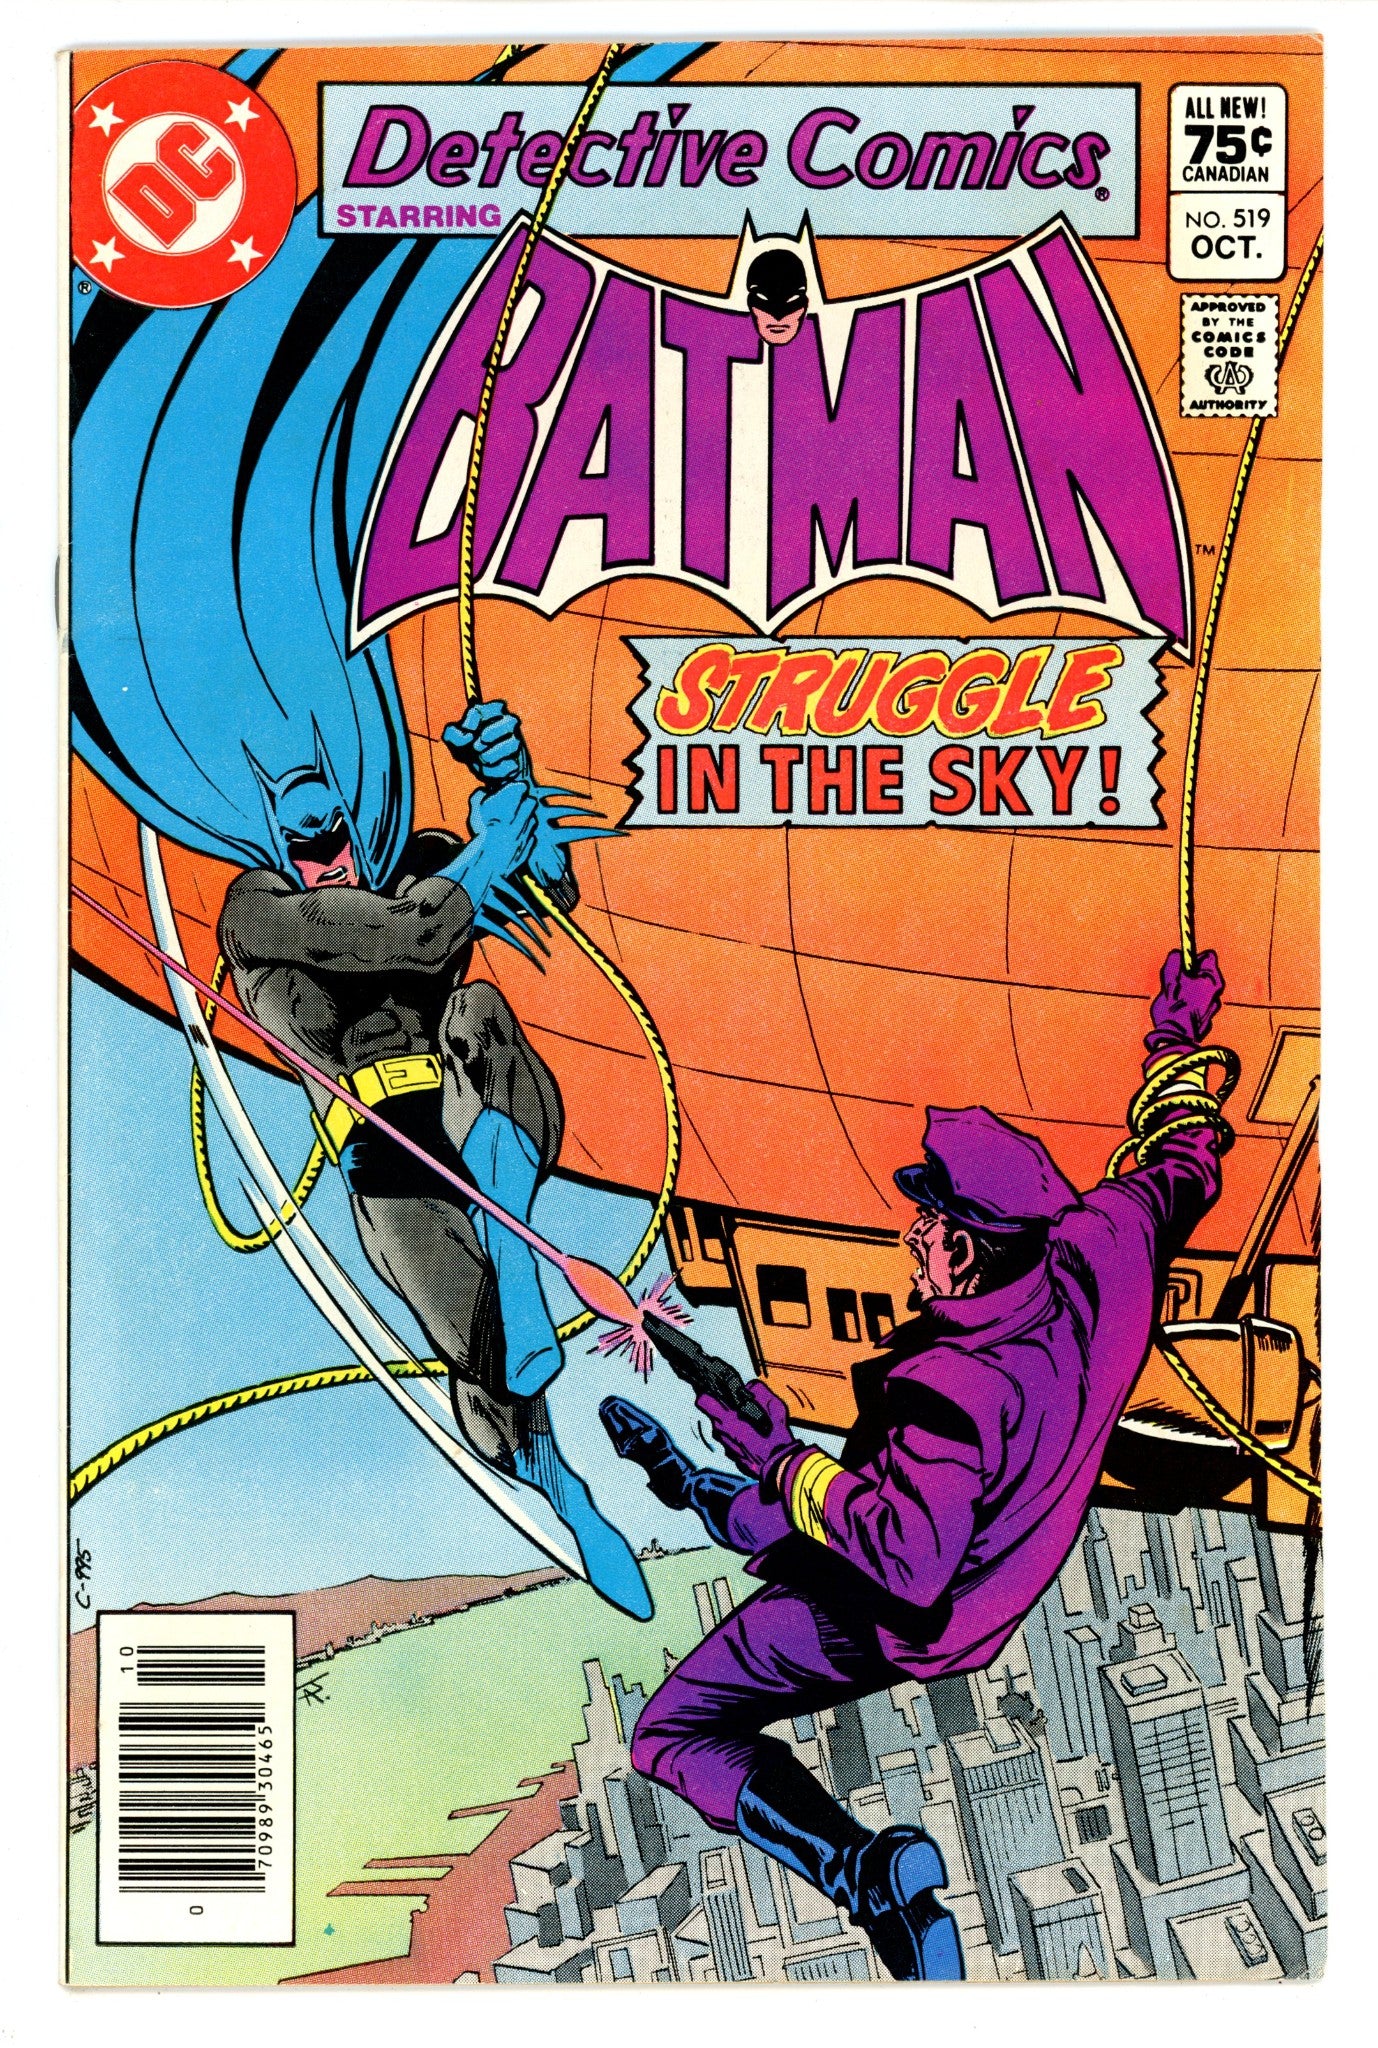 Detective Comics Vol 1 519 VF- (7.5) (1982) Canadian Price Variant 